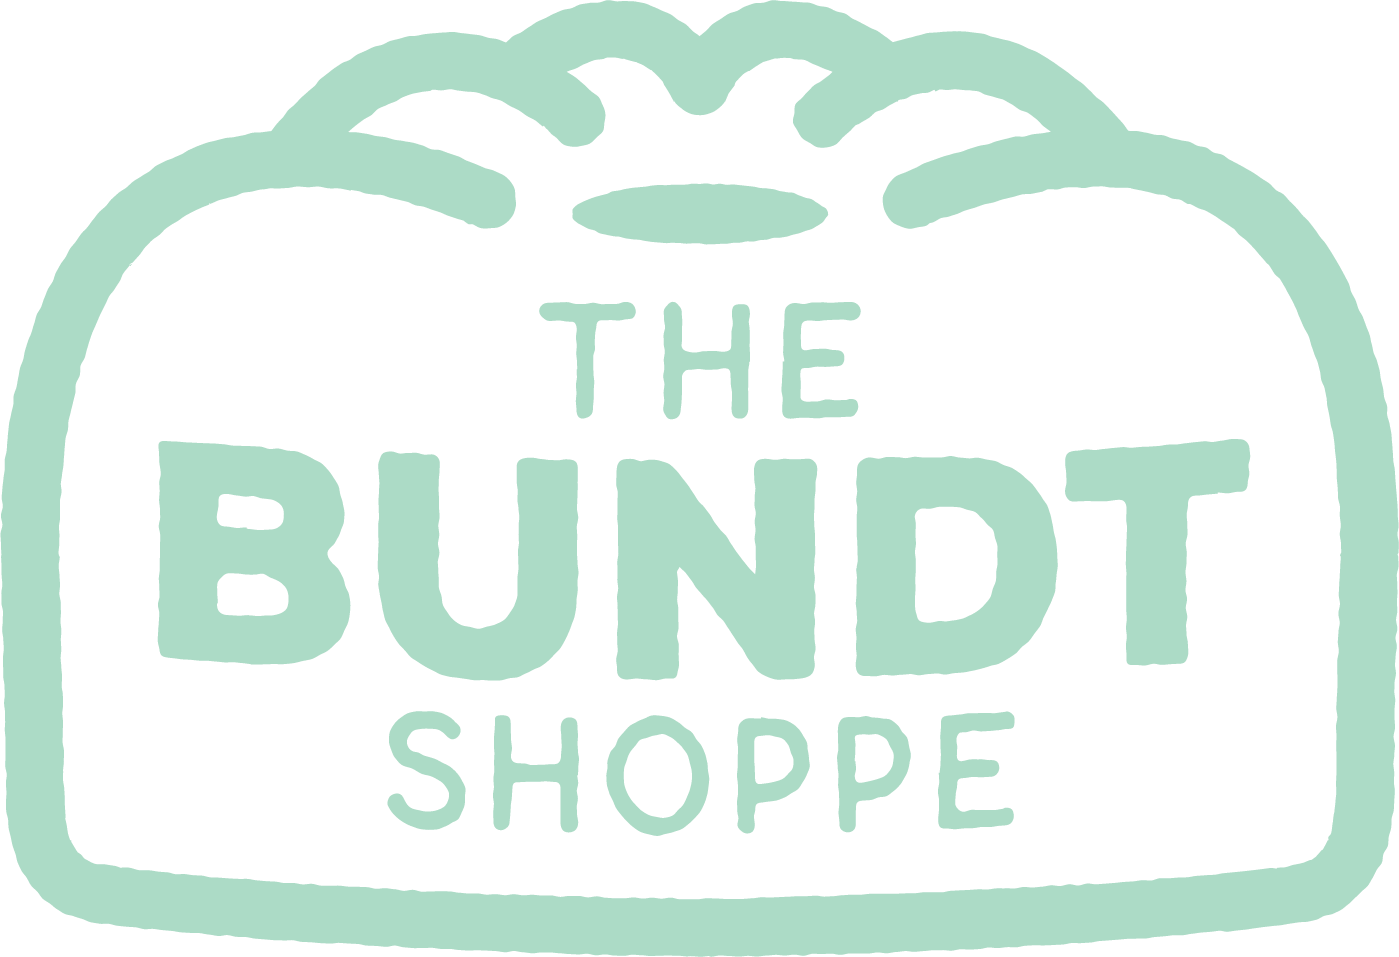 The Bundt Shoppe 